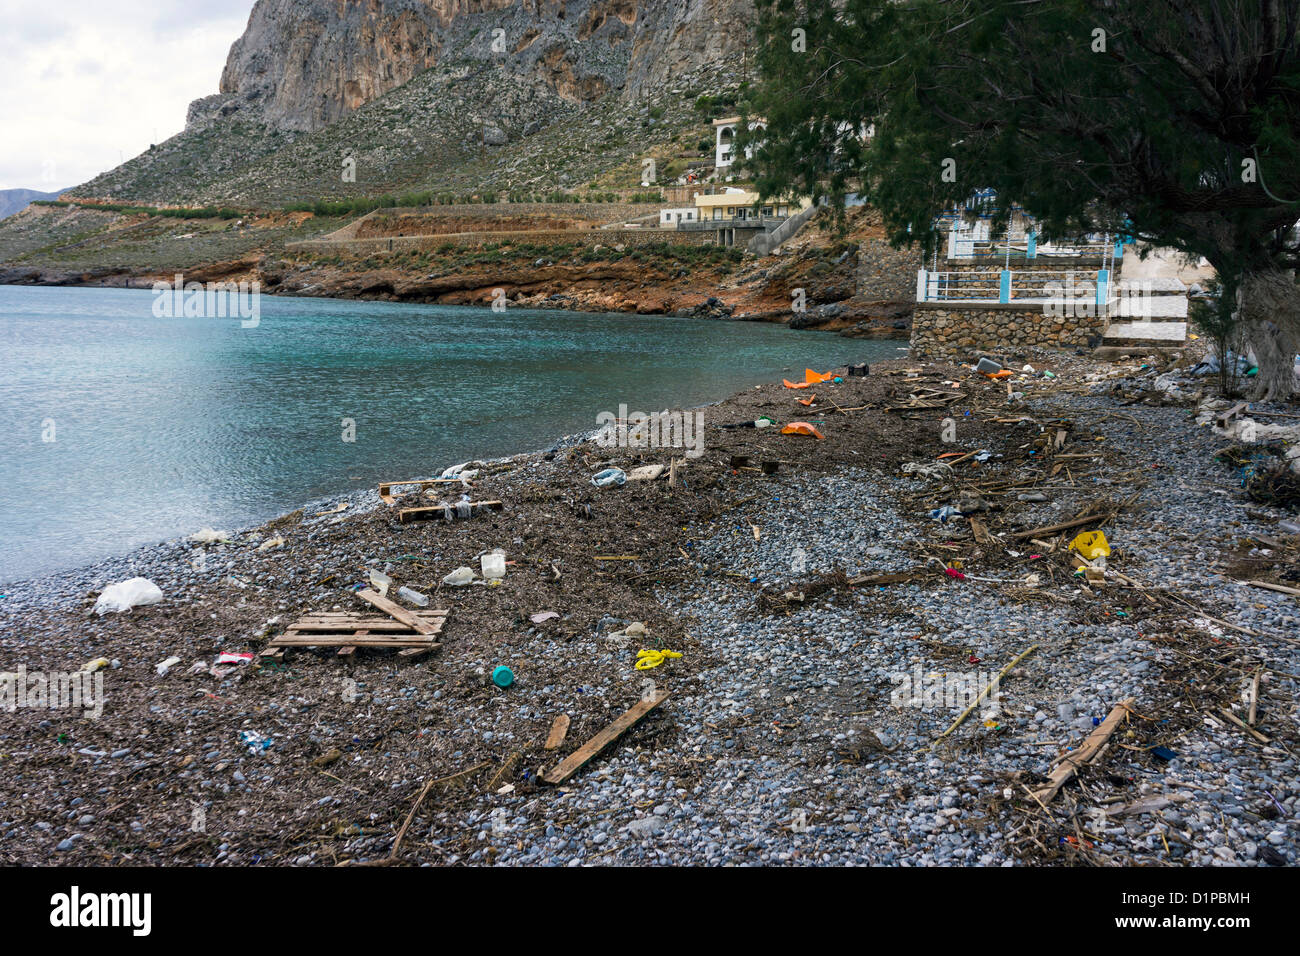 Rubbish garbage litter on beach,Kalymnos Greece Stock Photo